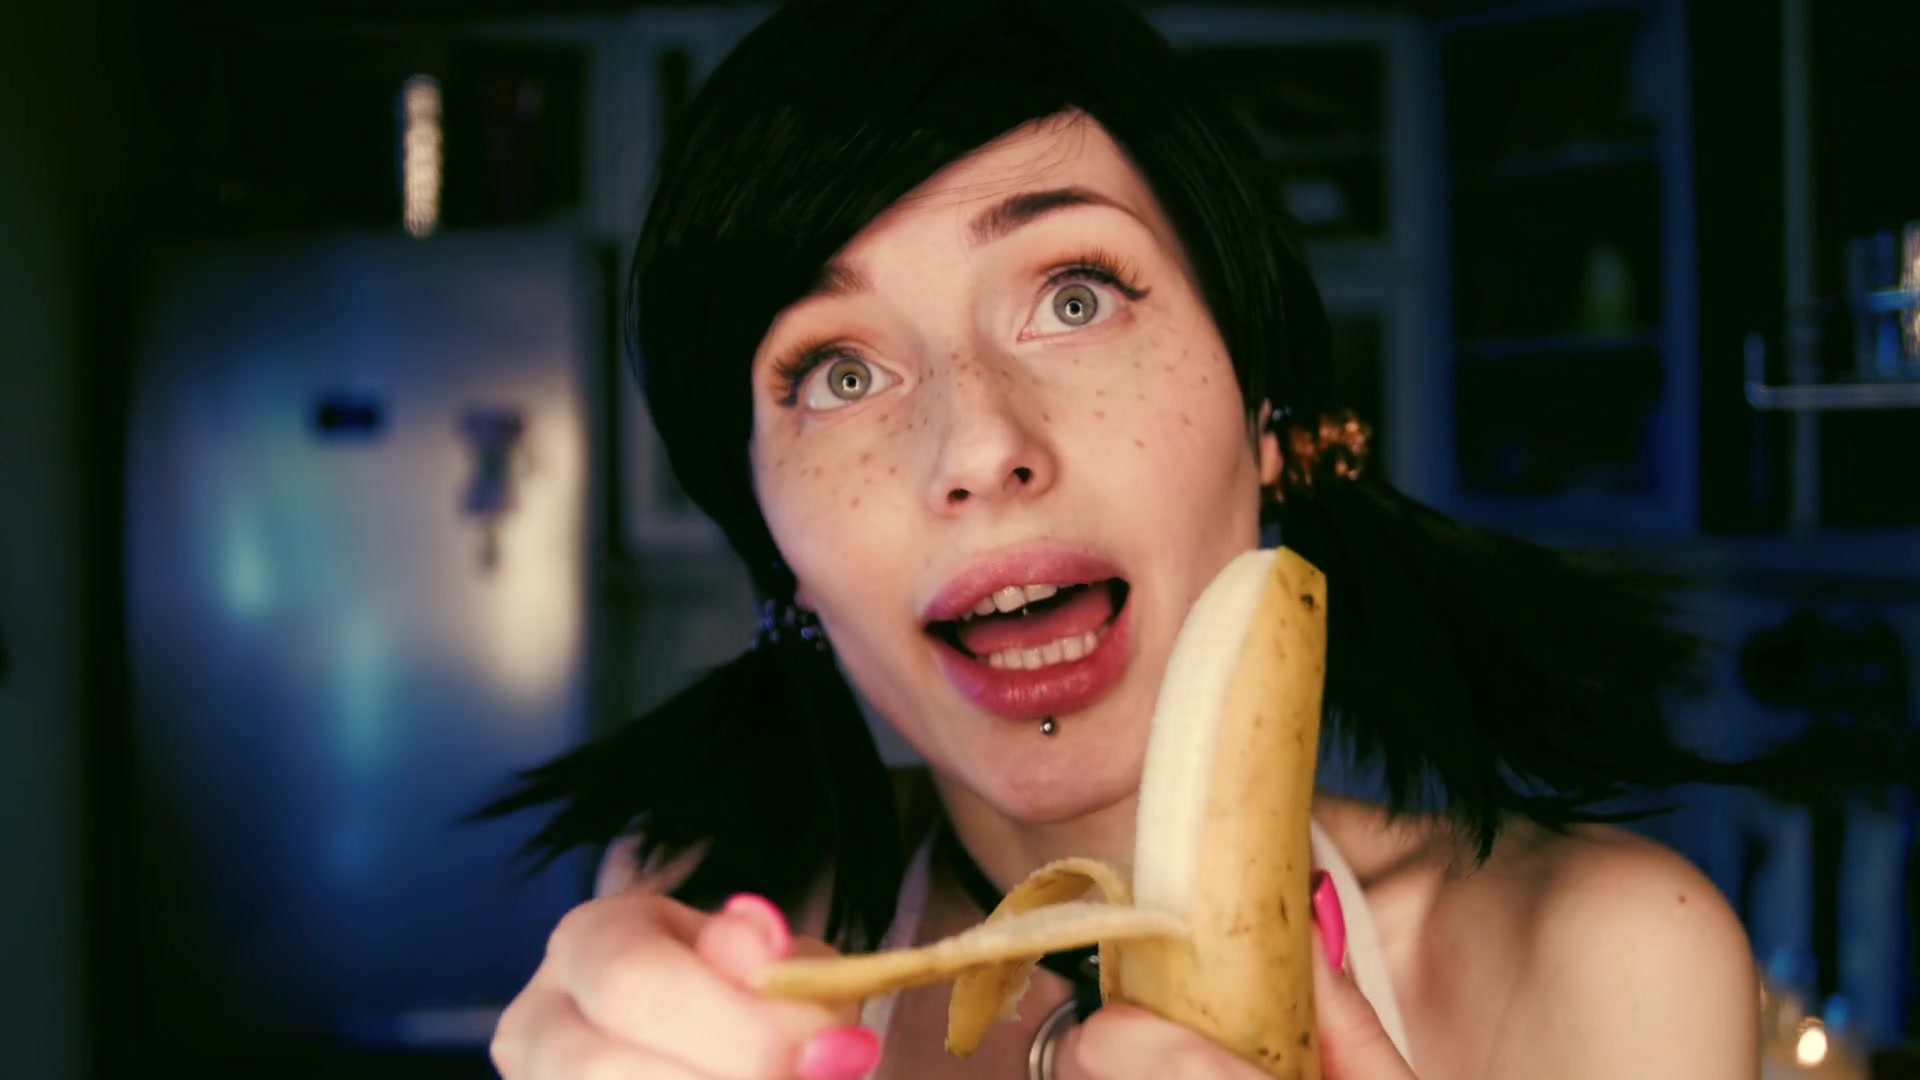 Eating banana asmr fan photos